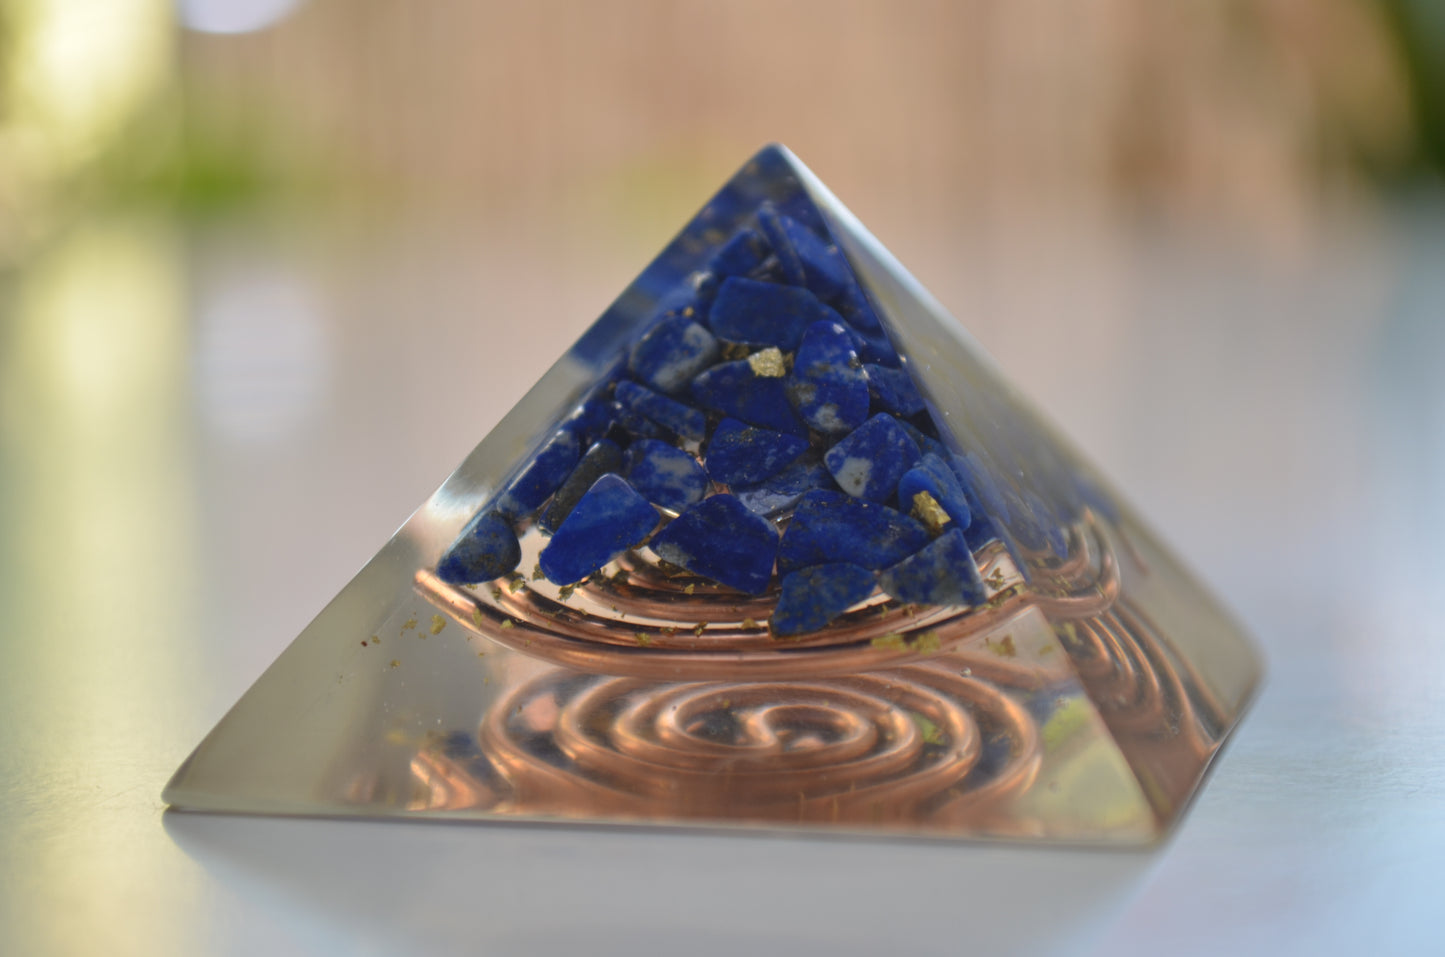 Orgonite Pyramid, Lapis Lazuli  - manifestation, protection, programmed and activated amulet charm